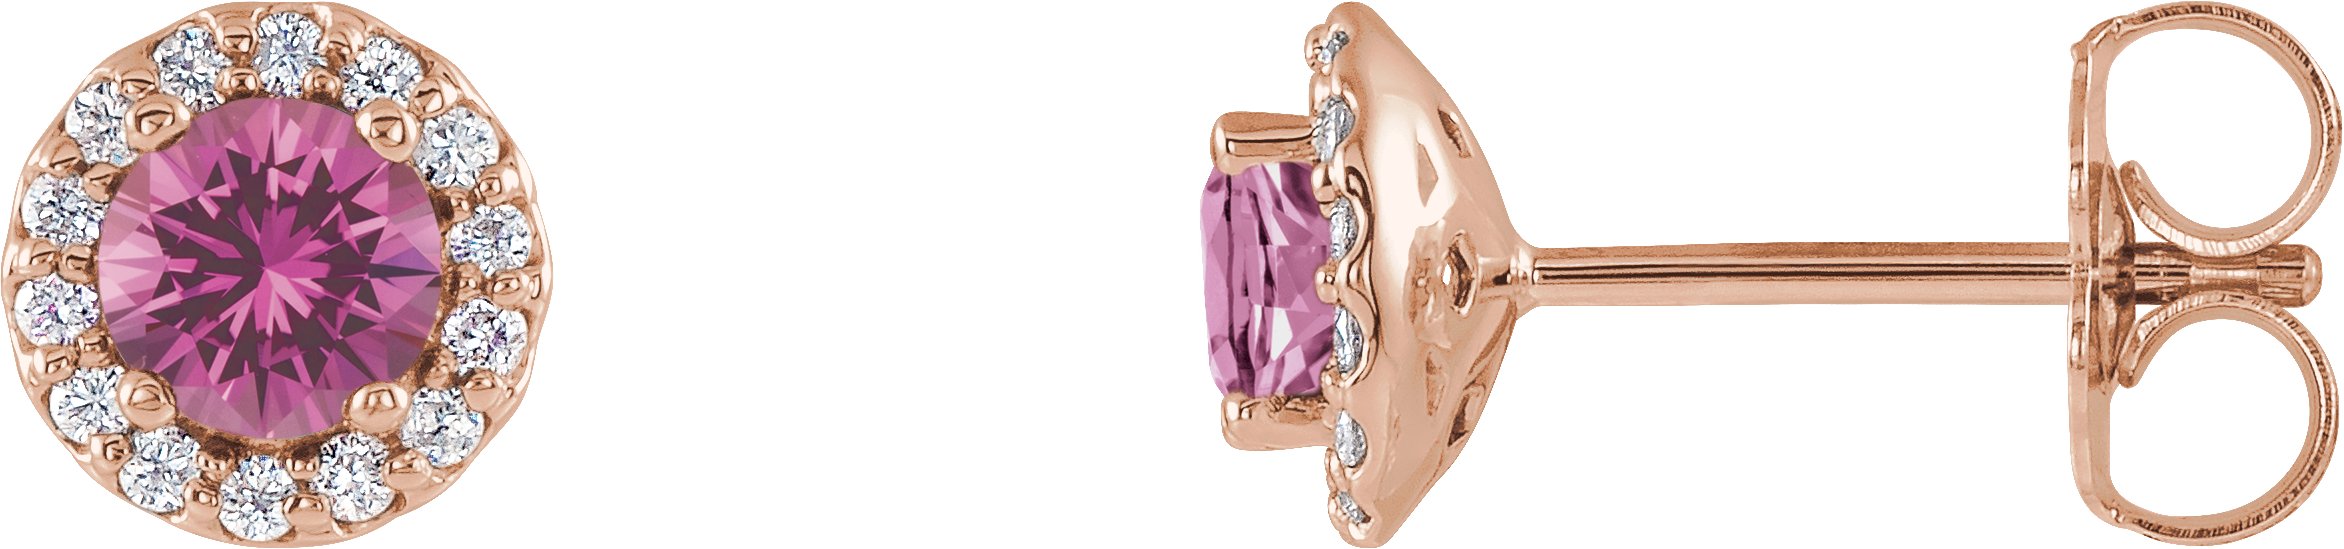 14K Rose 4 mm Natural Pink Sapphire & 1/10 CTW Natural Diamond Earrings